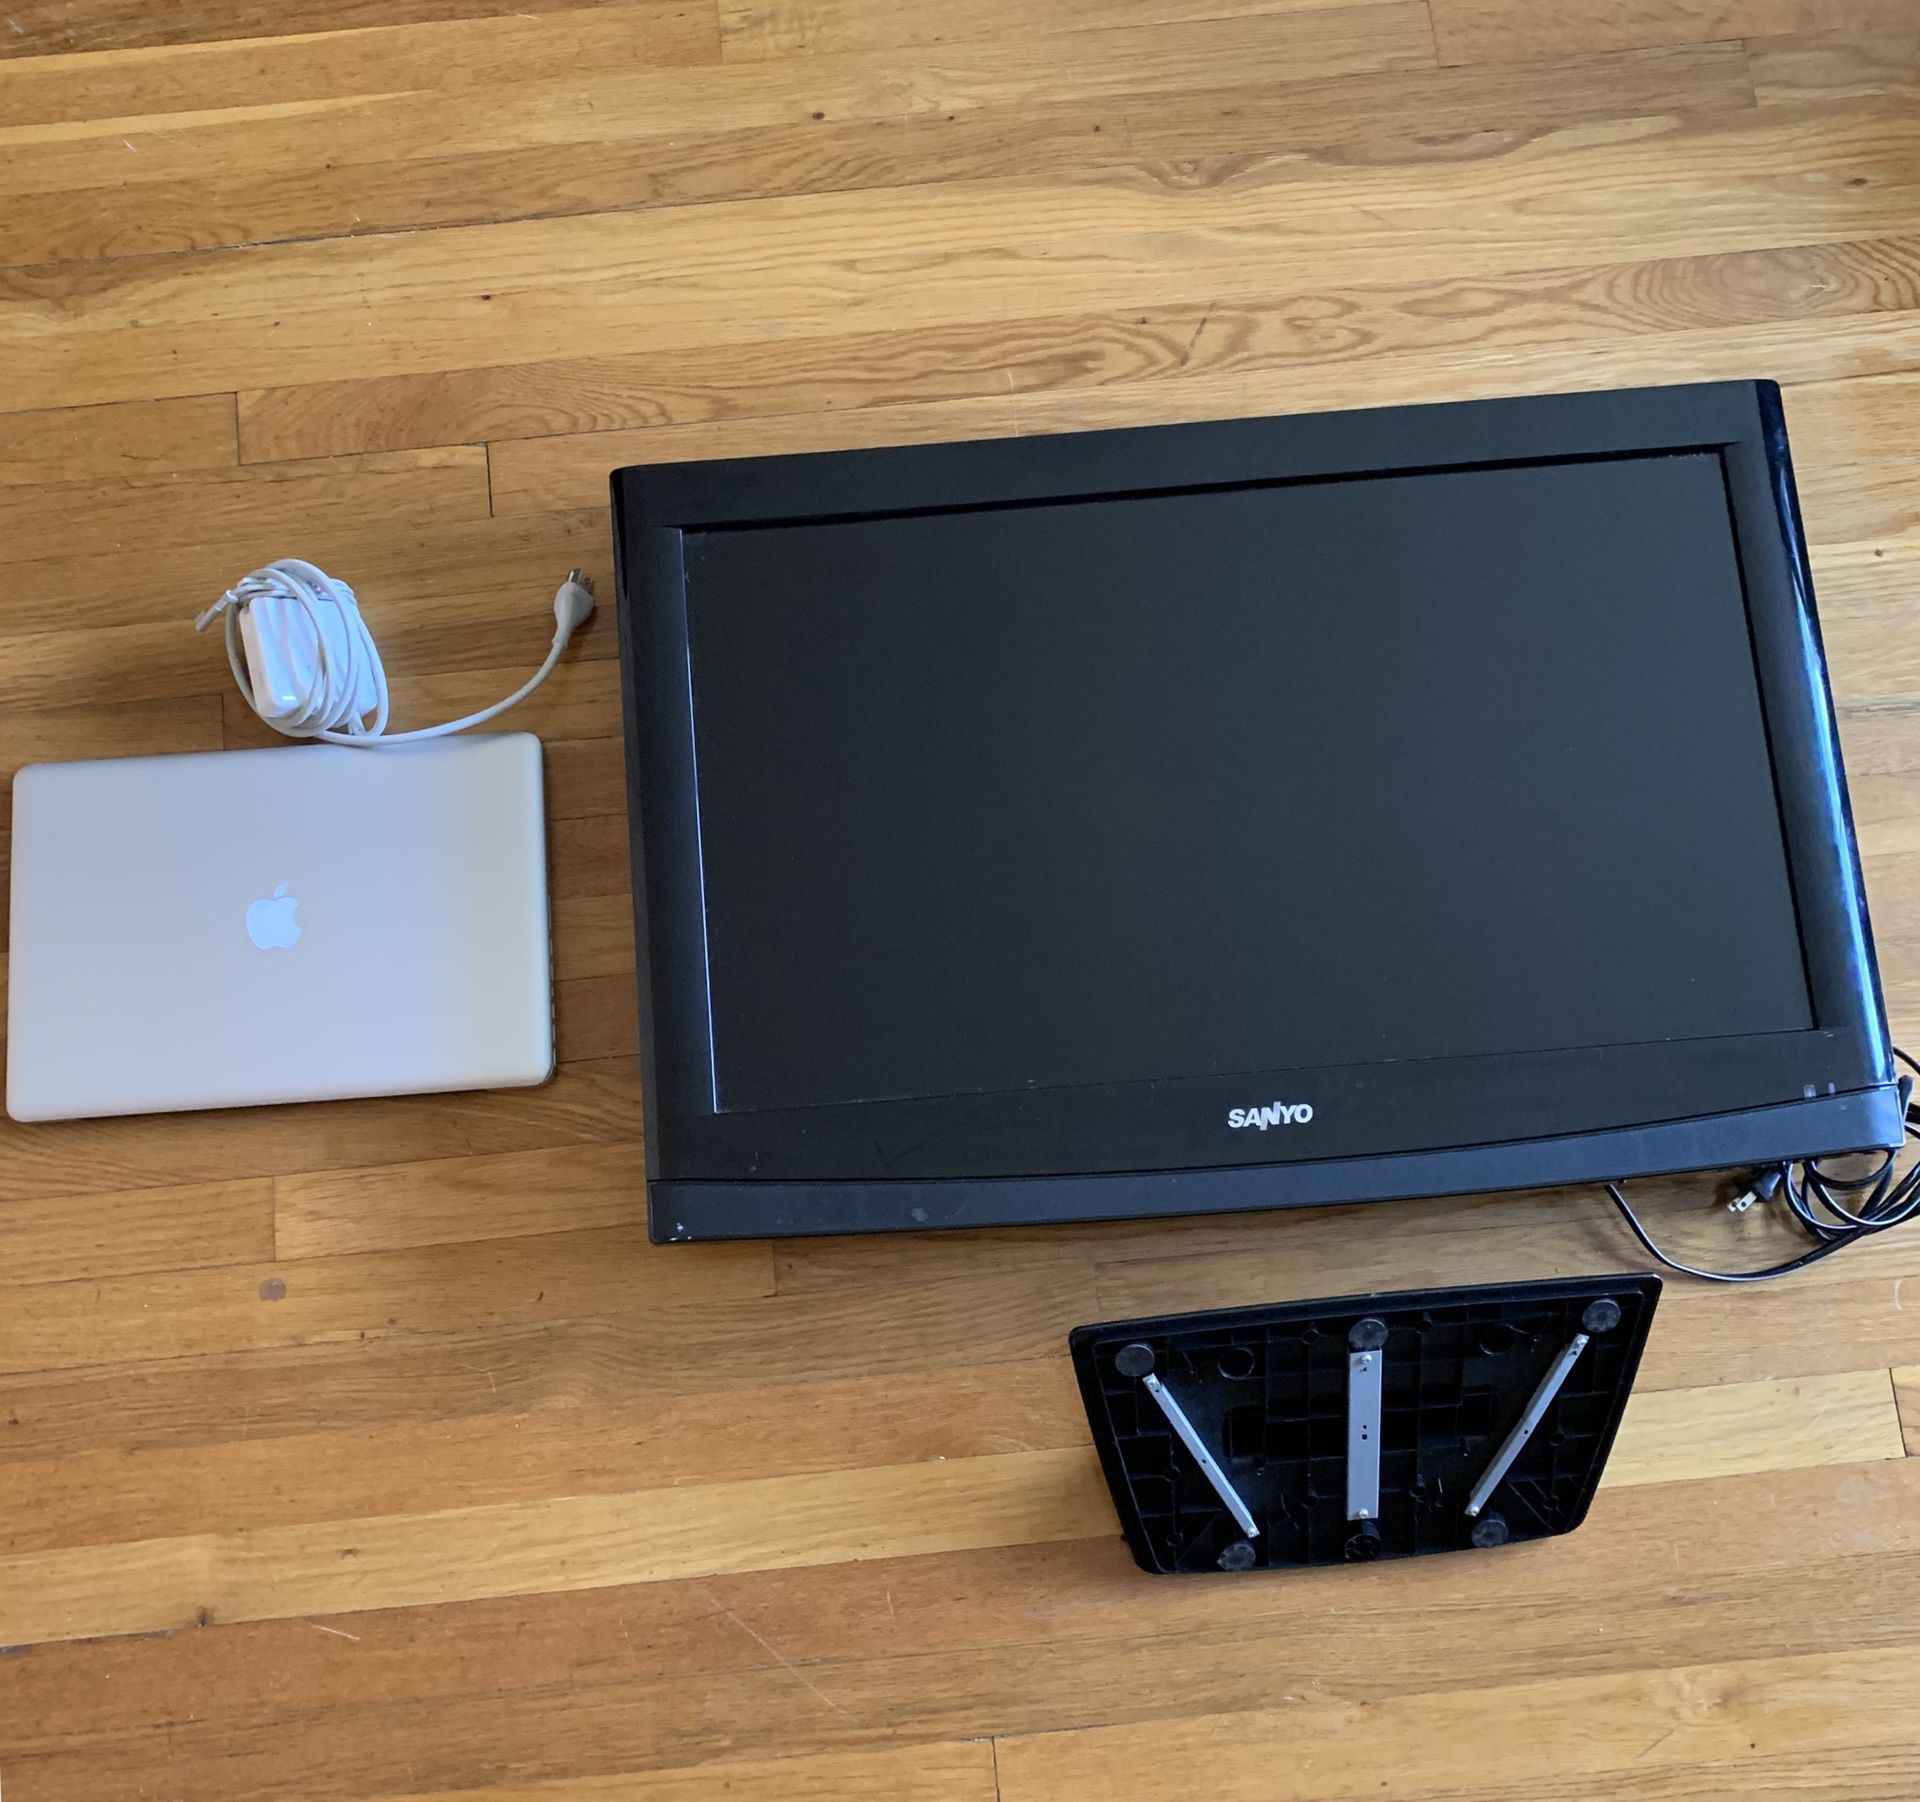 Apple - MacBook Pro and Tv